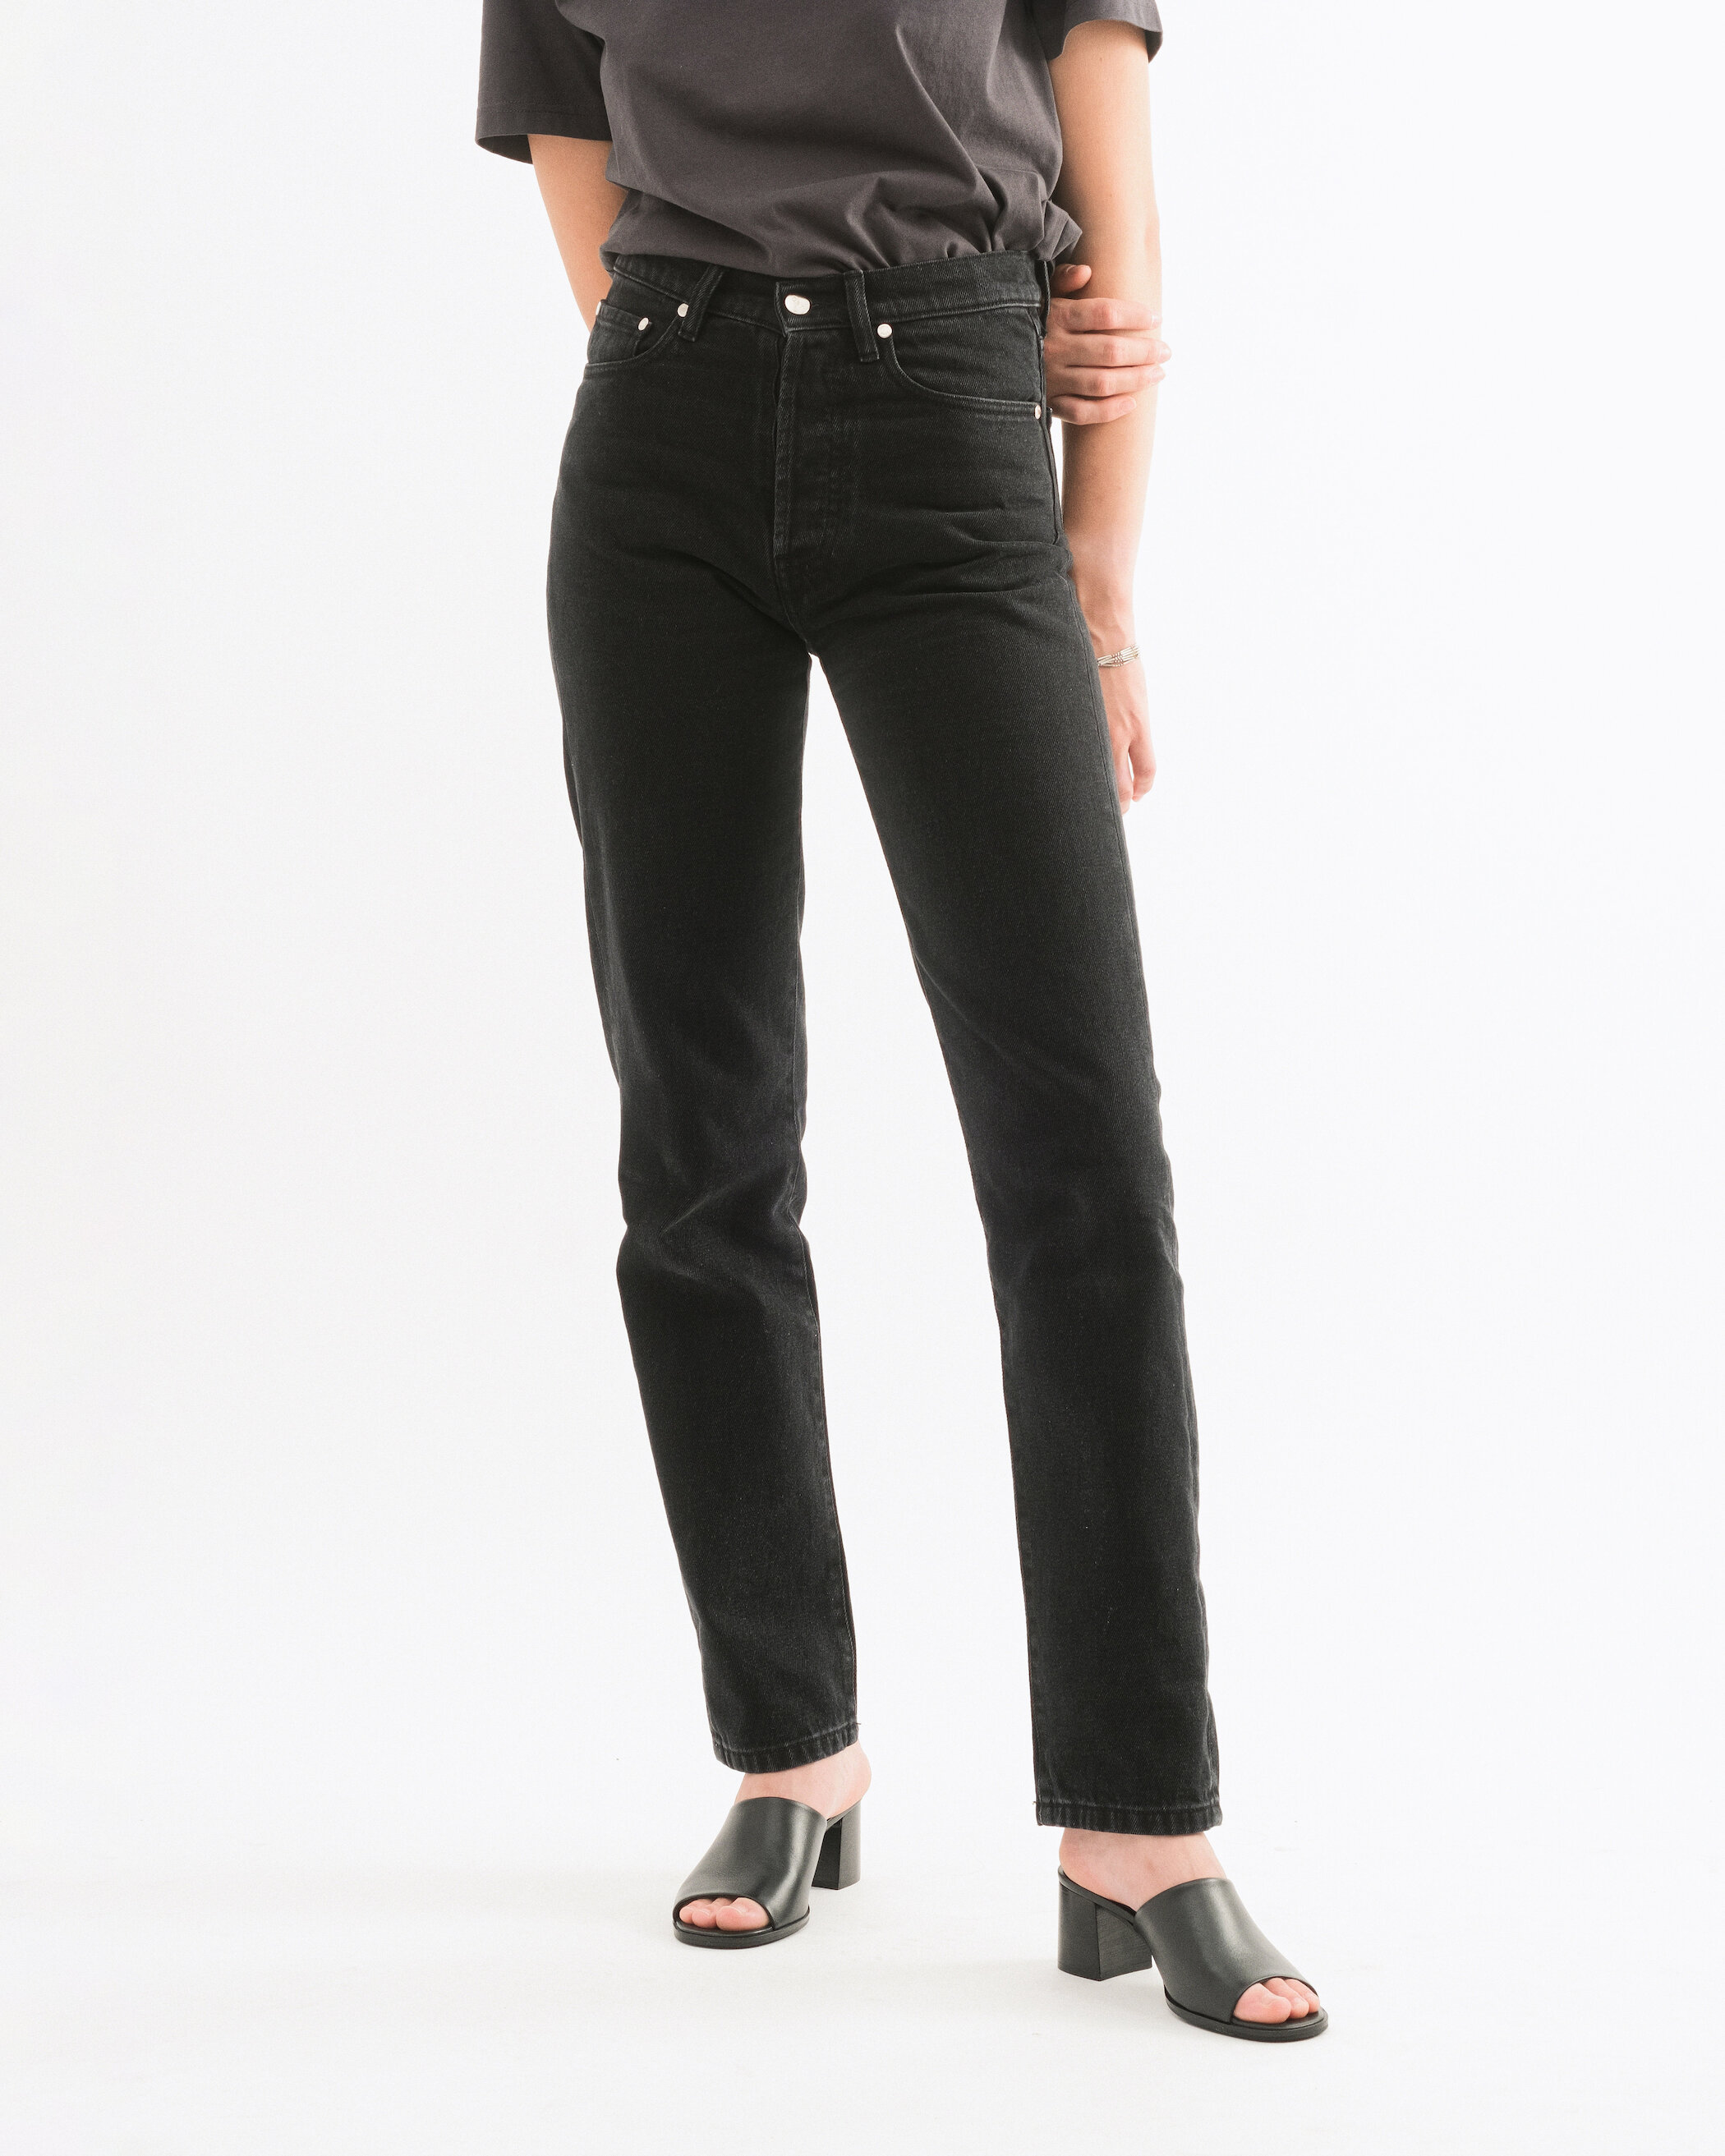 Glein - Jeans Women - washed black